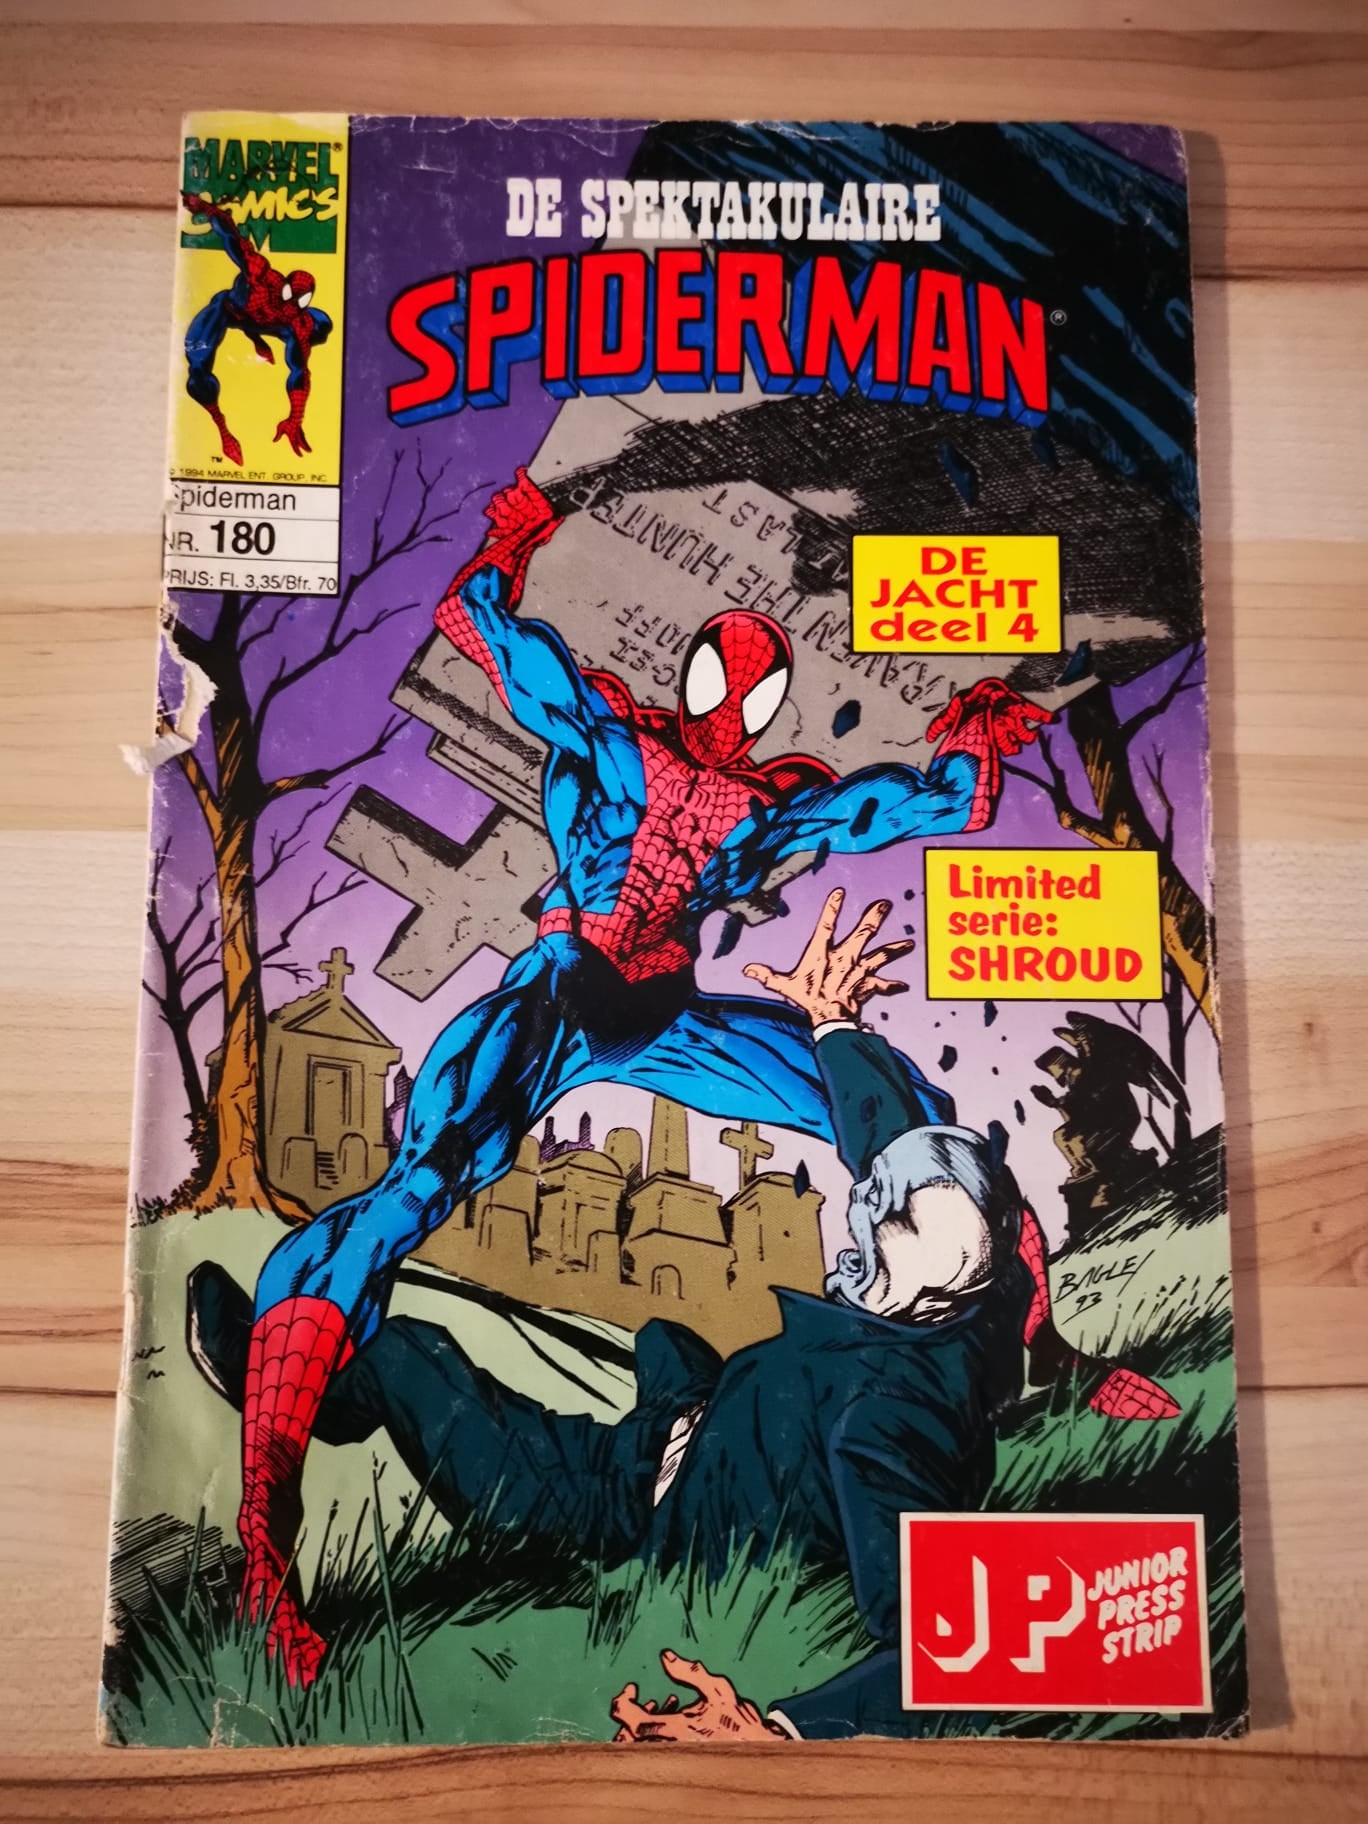 De spektakulaire spiderman #180